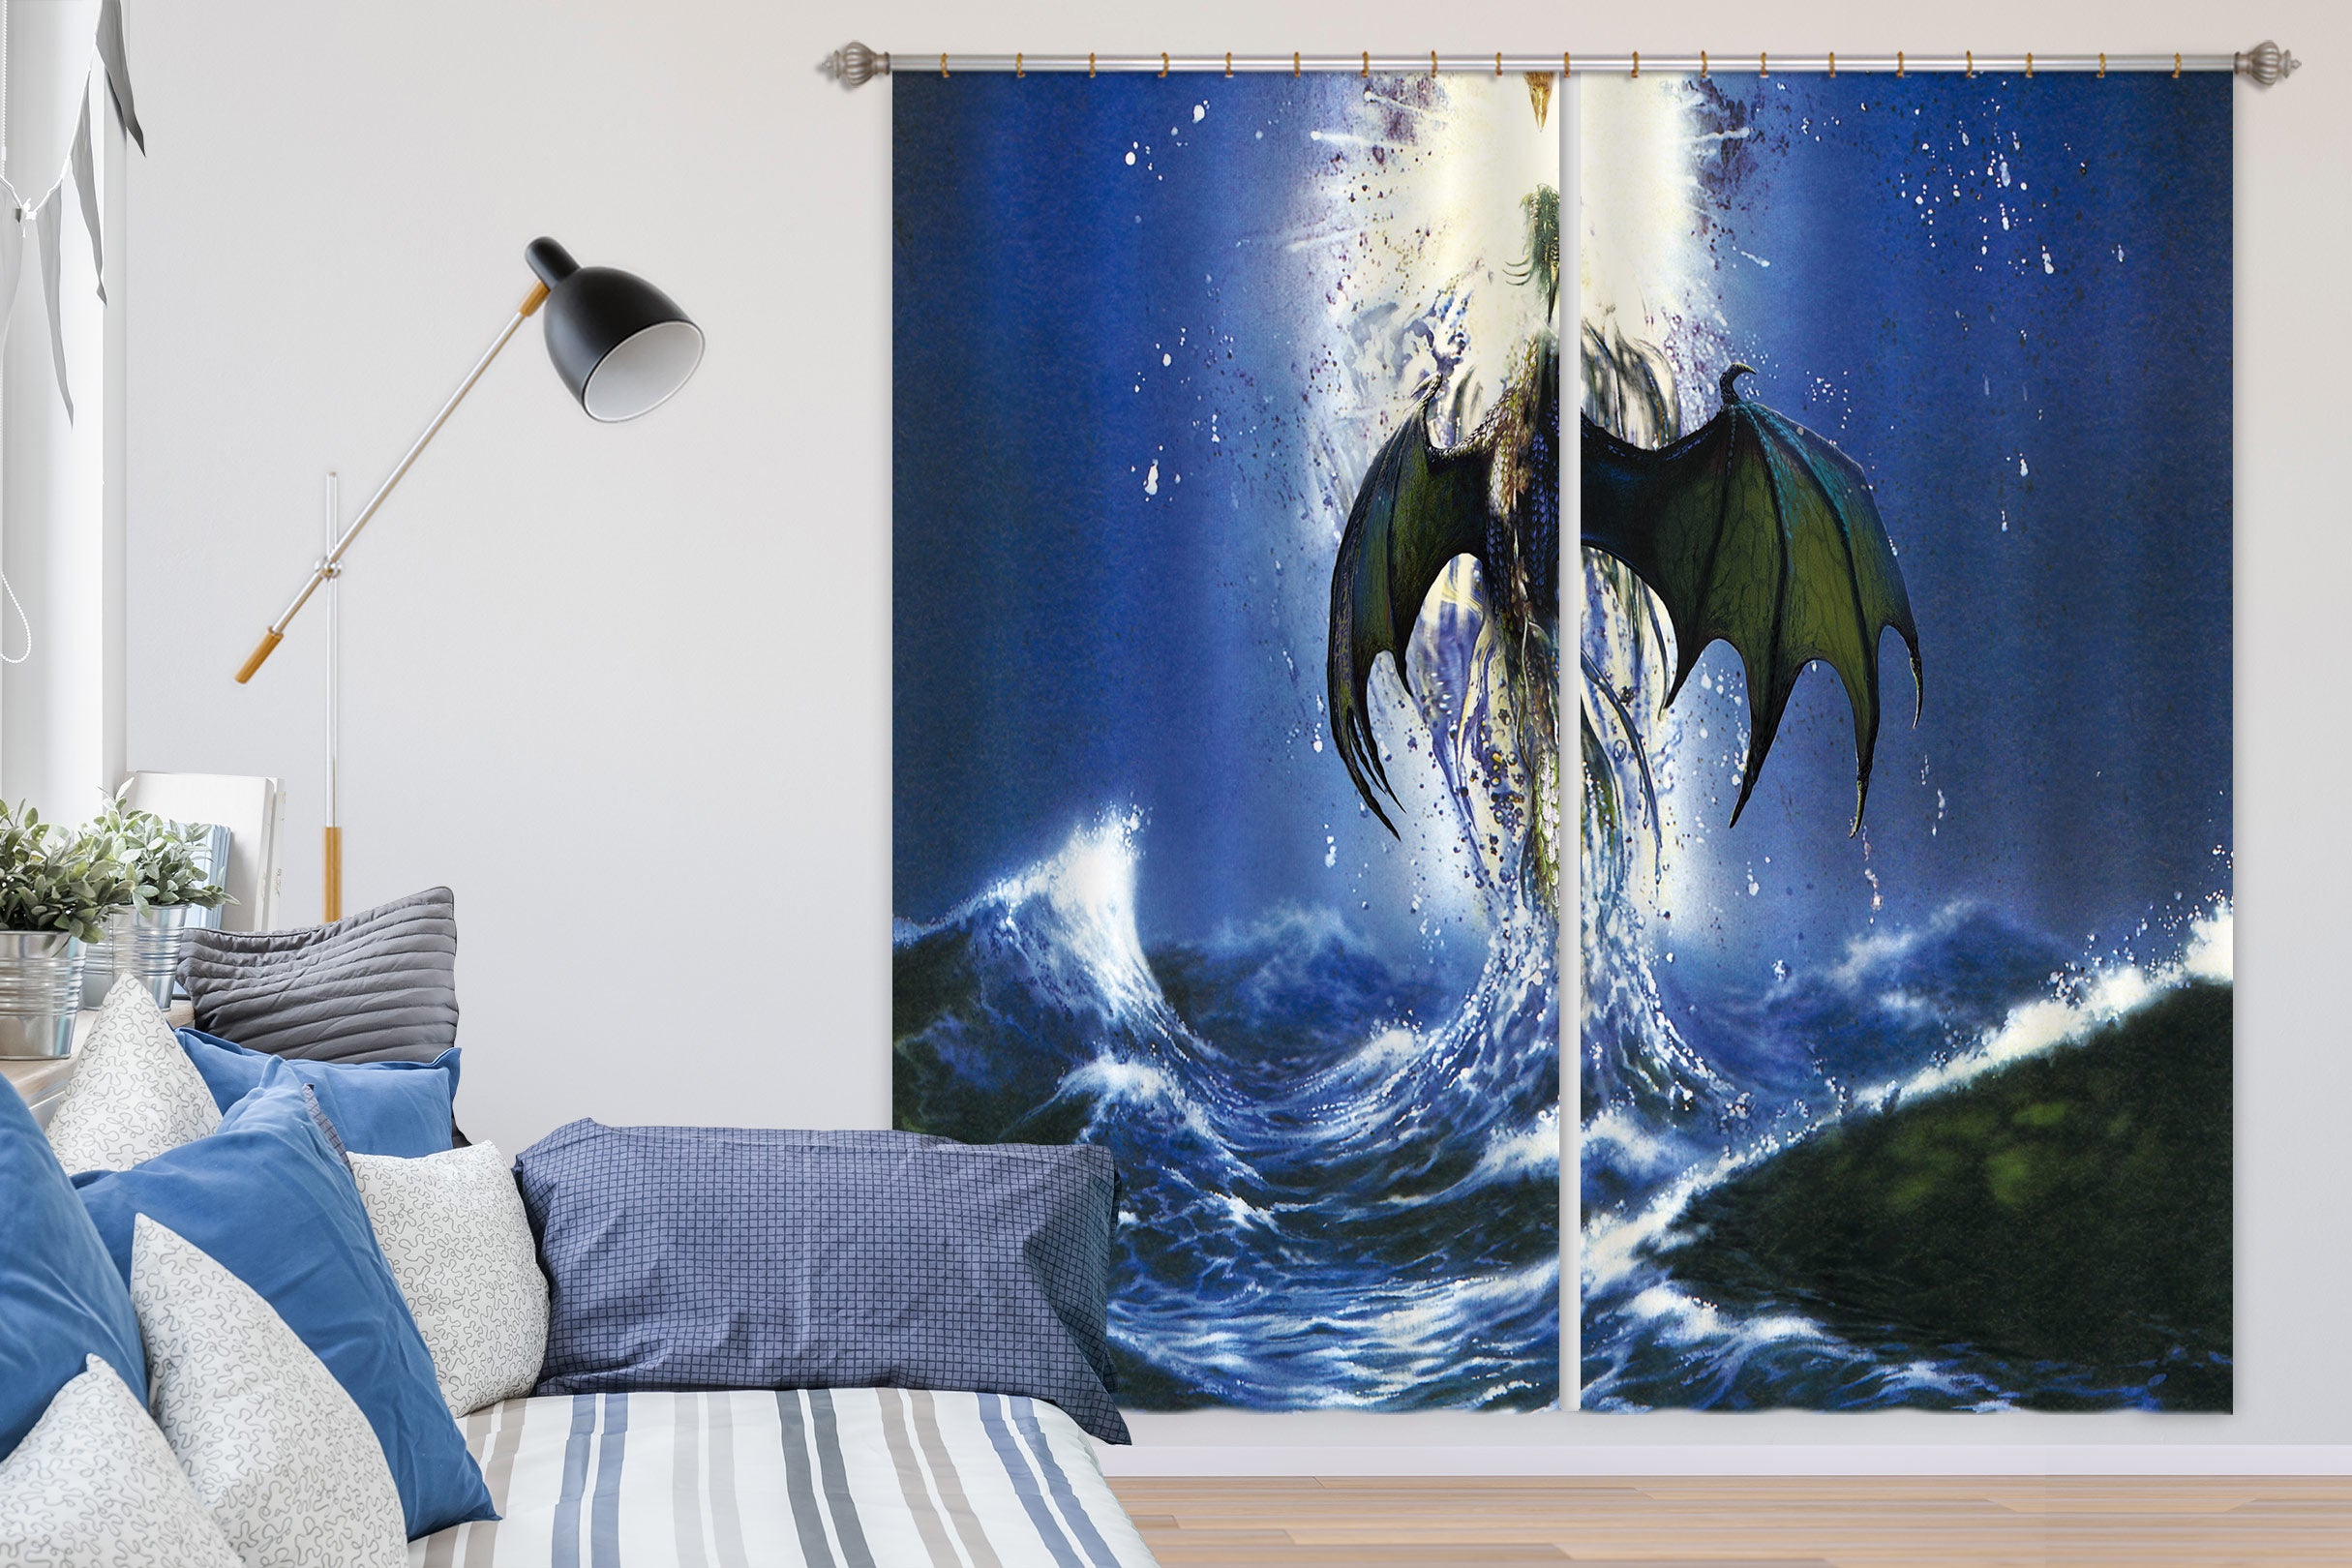 3D Night Sky Waves Dragon 7156 Ciruelo Curtain Curtains Drapes